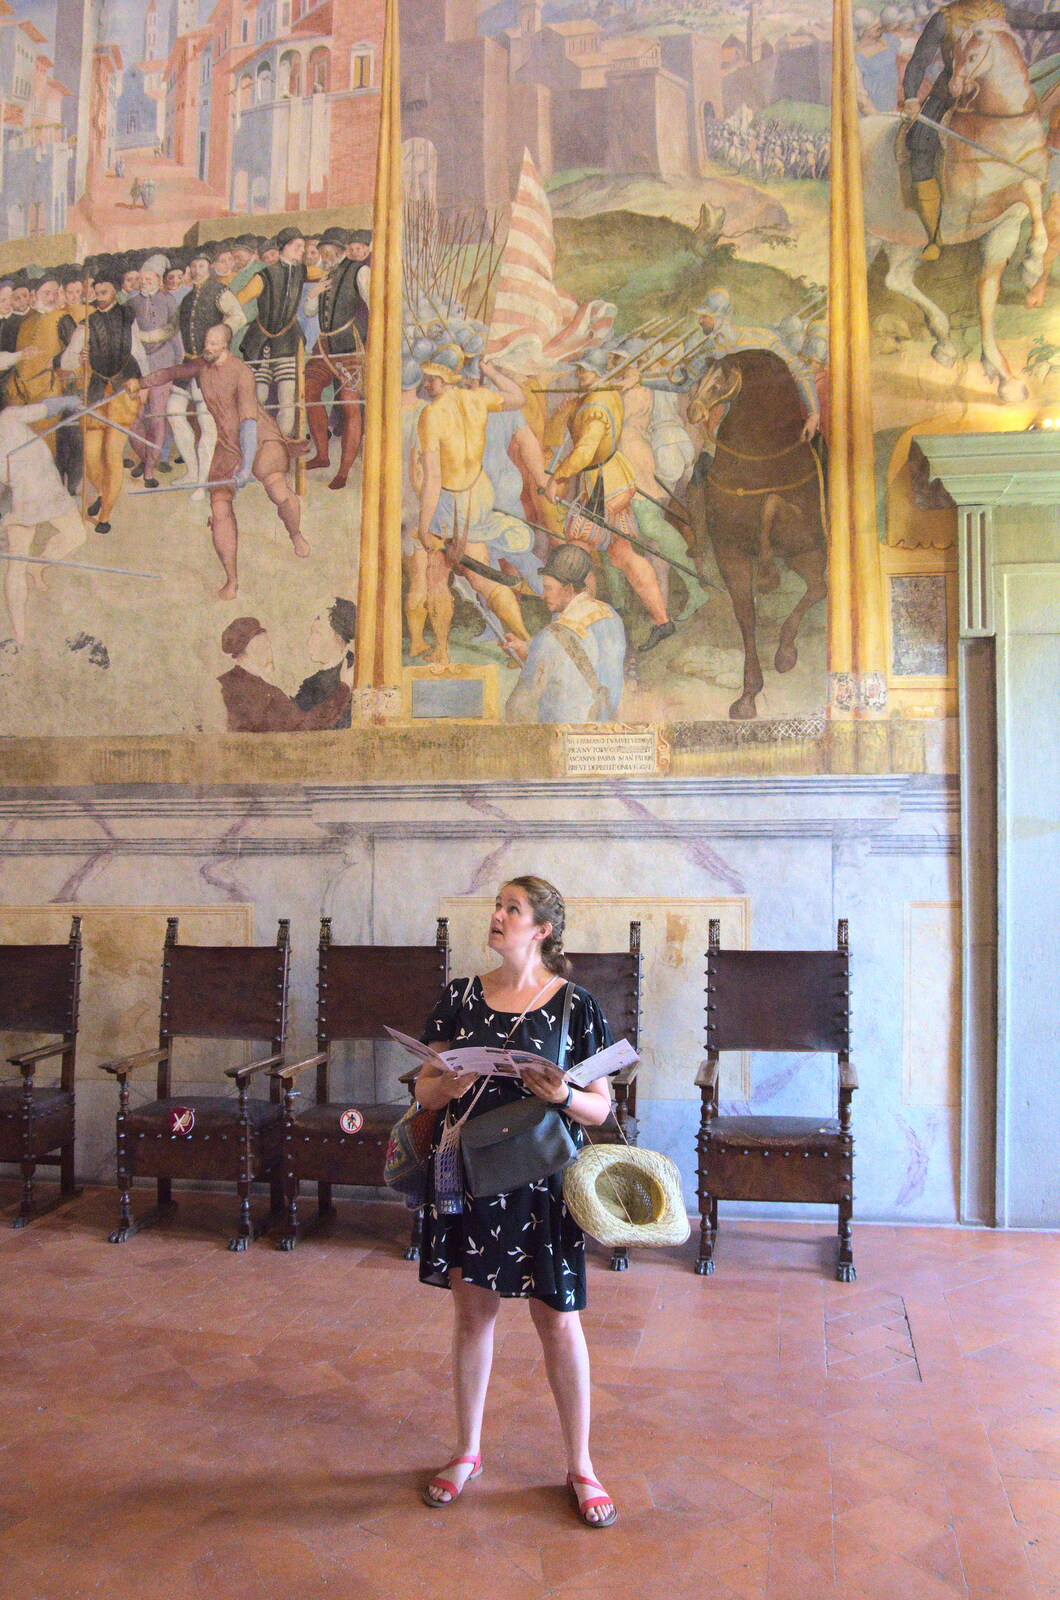 Castiglio Del Lago and Santuario della Verna, Umbria and Tuscany, Italy - 1st September 2022: Isobel looks at paintings